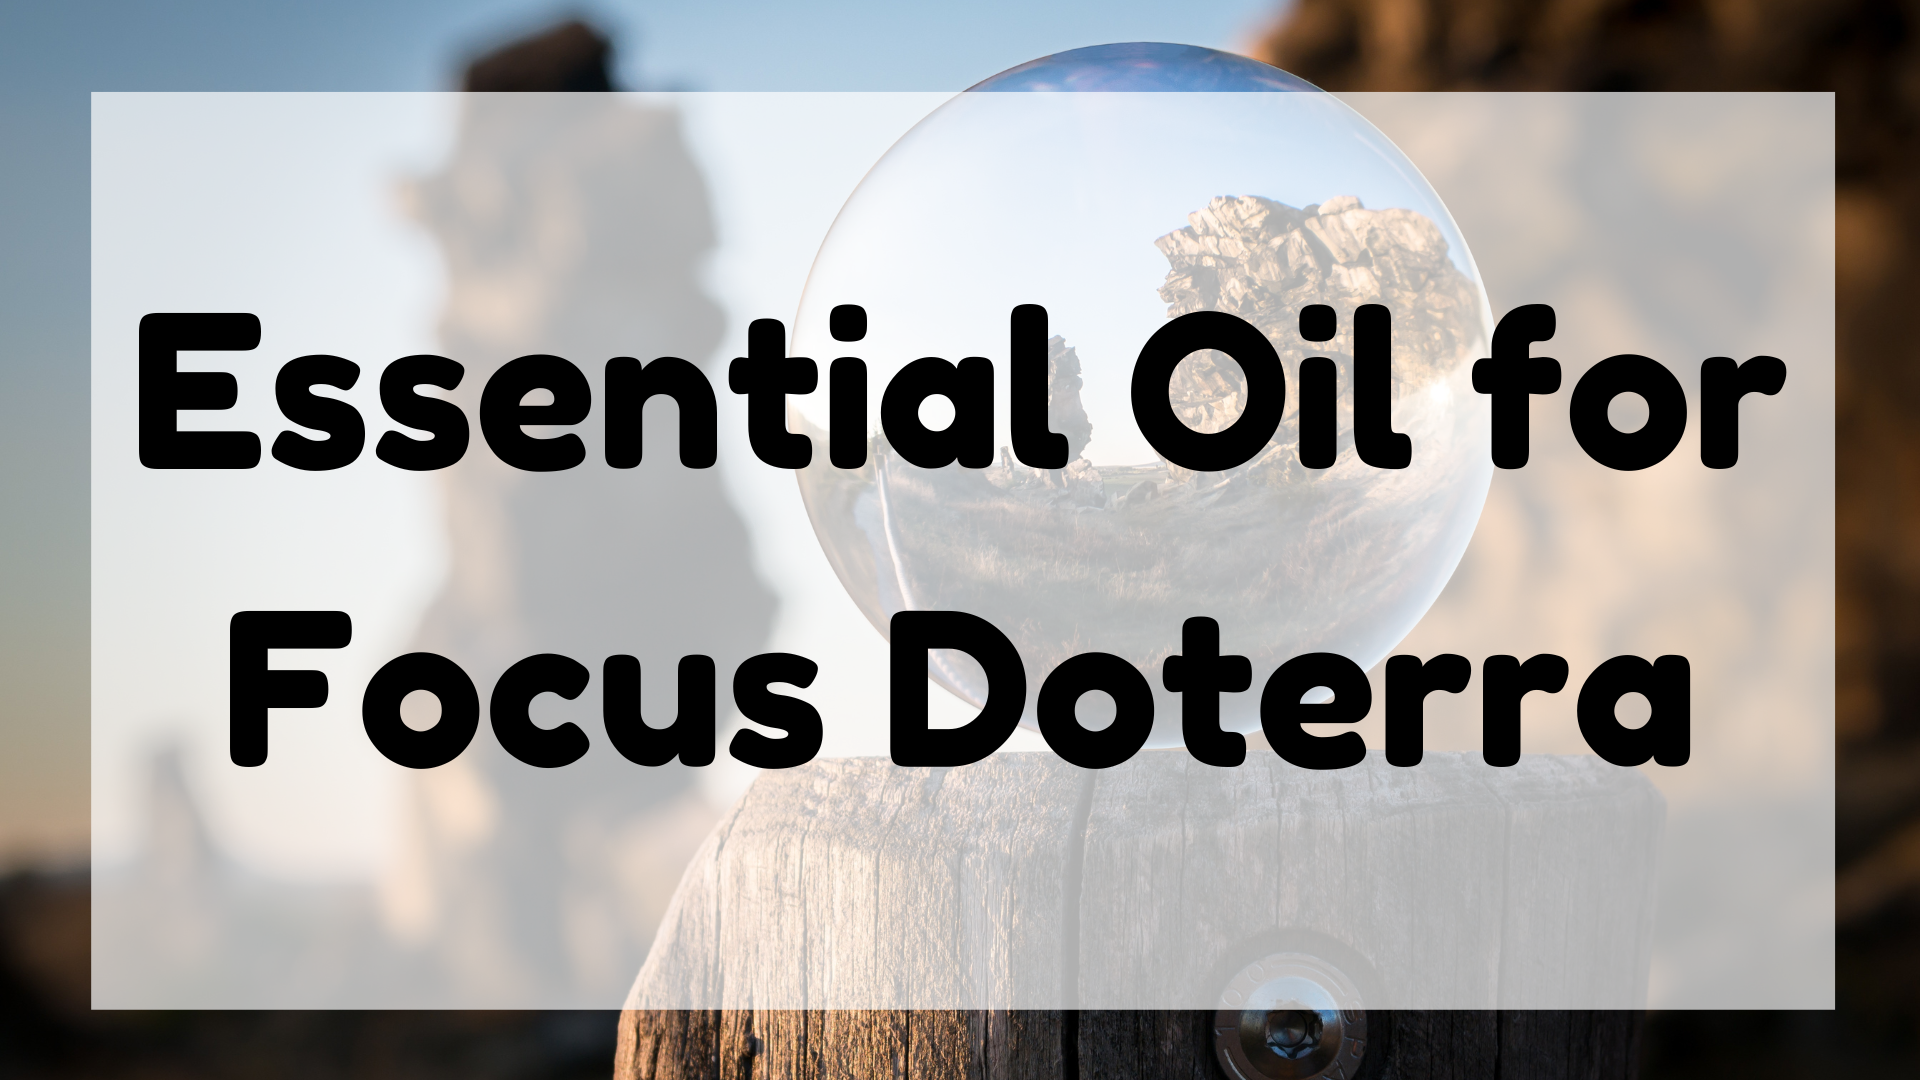 Essential Oil for Focus Doterra featured image